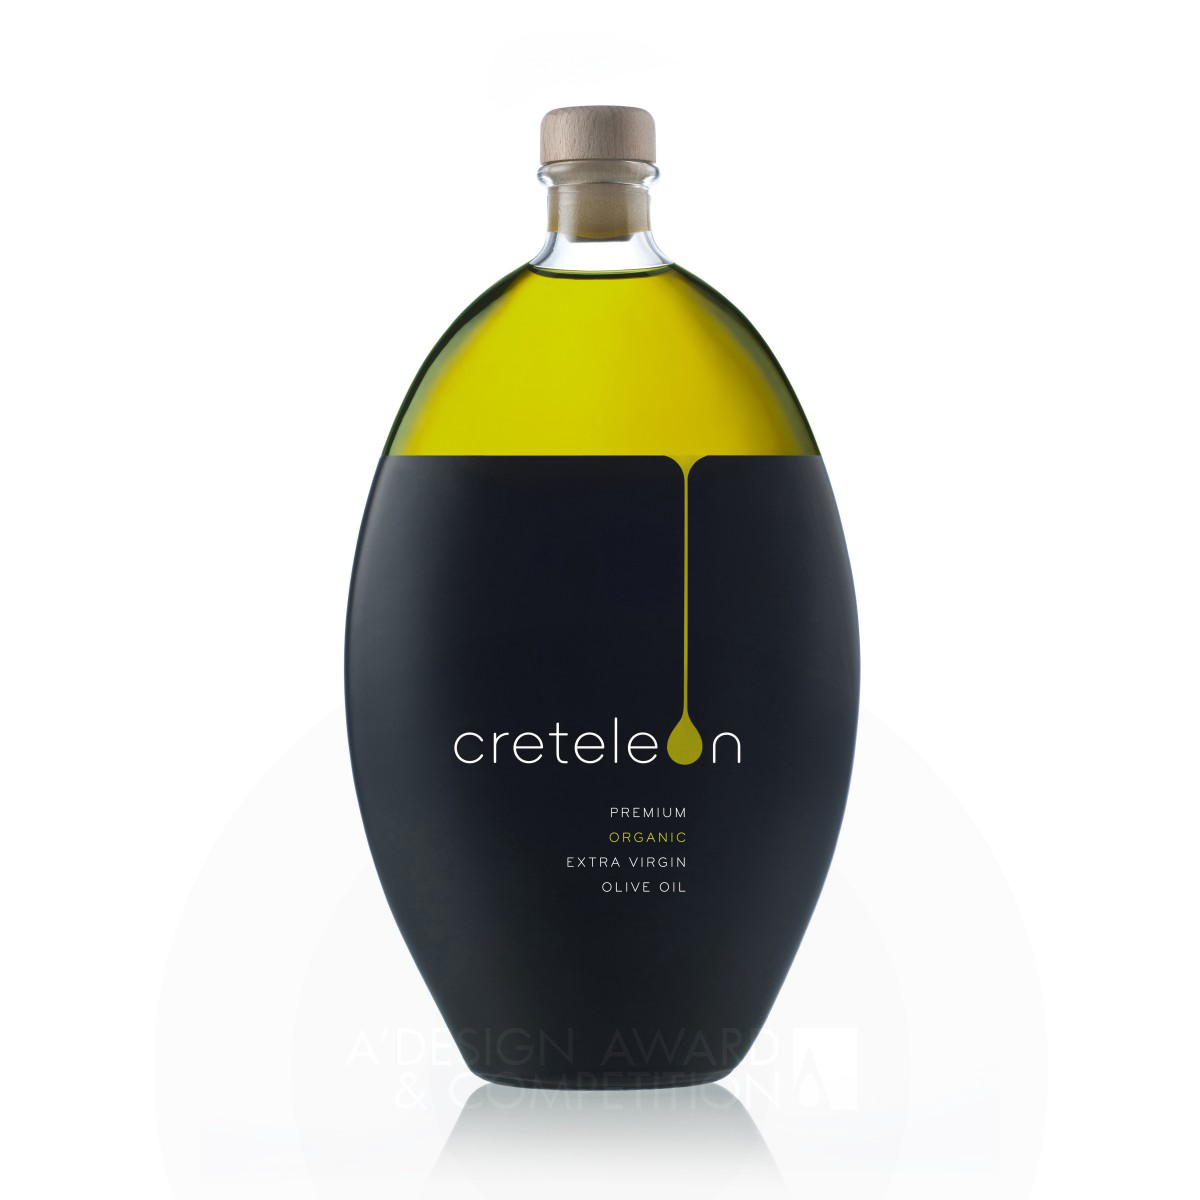 creteleon Bottle by T&E Polydorou Design Ltd